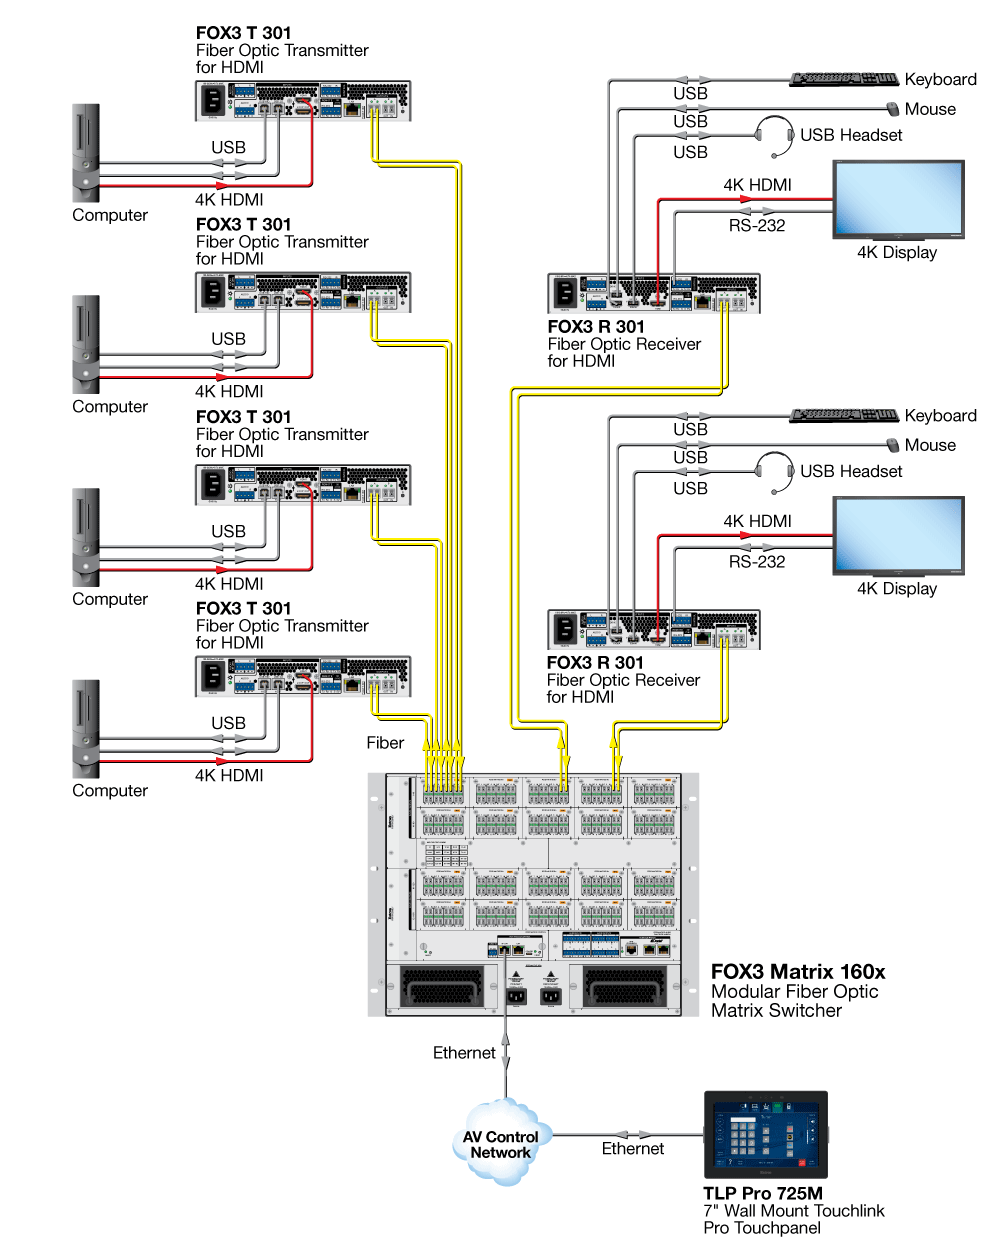 FOX3 Matrix System Diagram